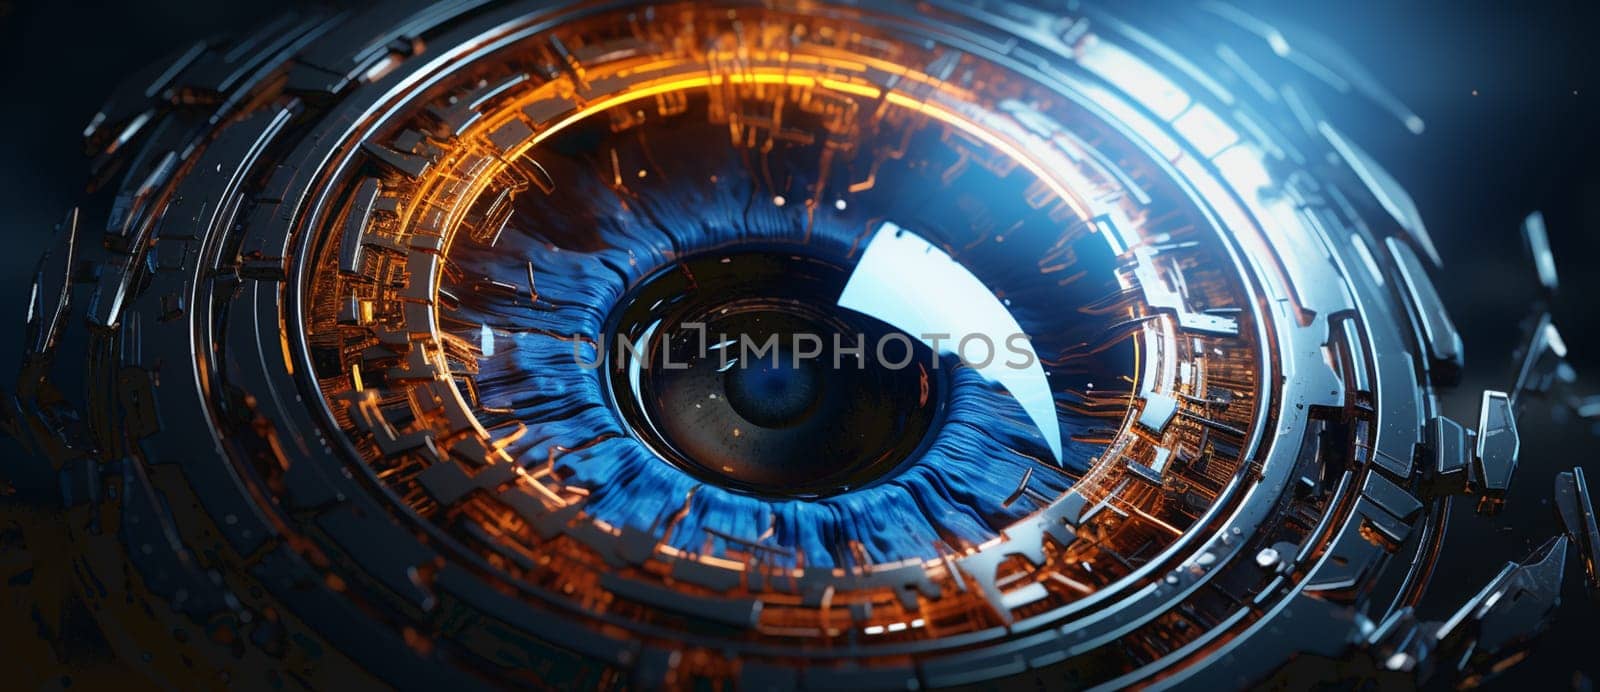 blue Cyber eye digital data technology background. High quality photo